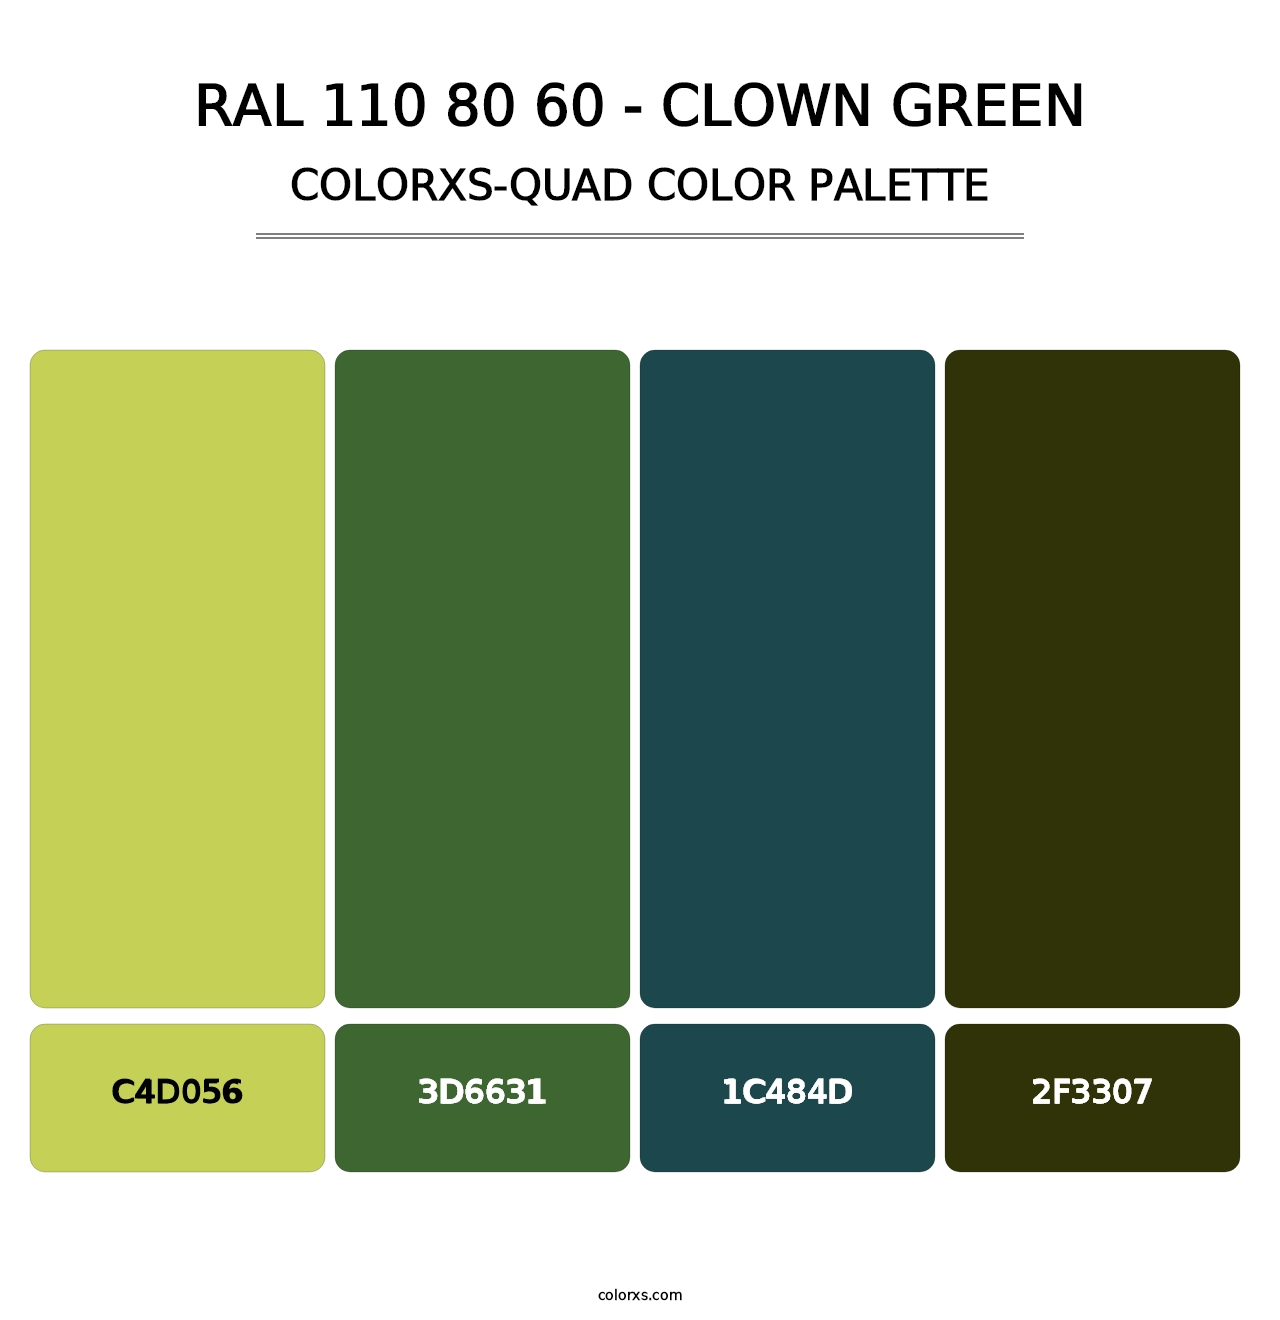 RAL 110 80 60 - Clown Green - Colorxs Quad Palette